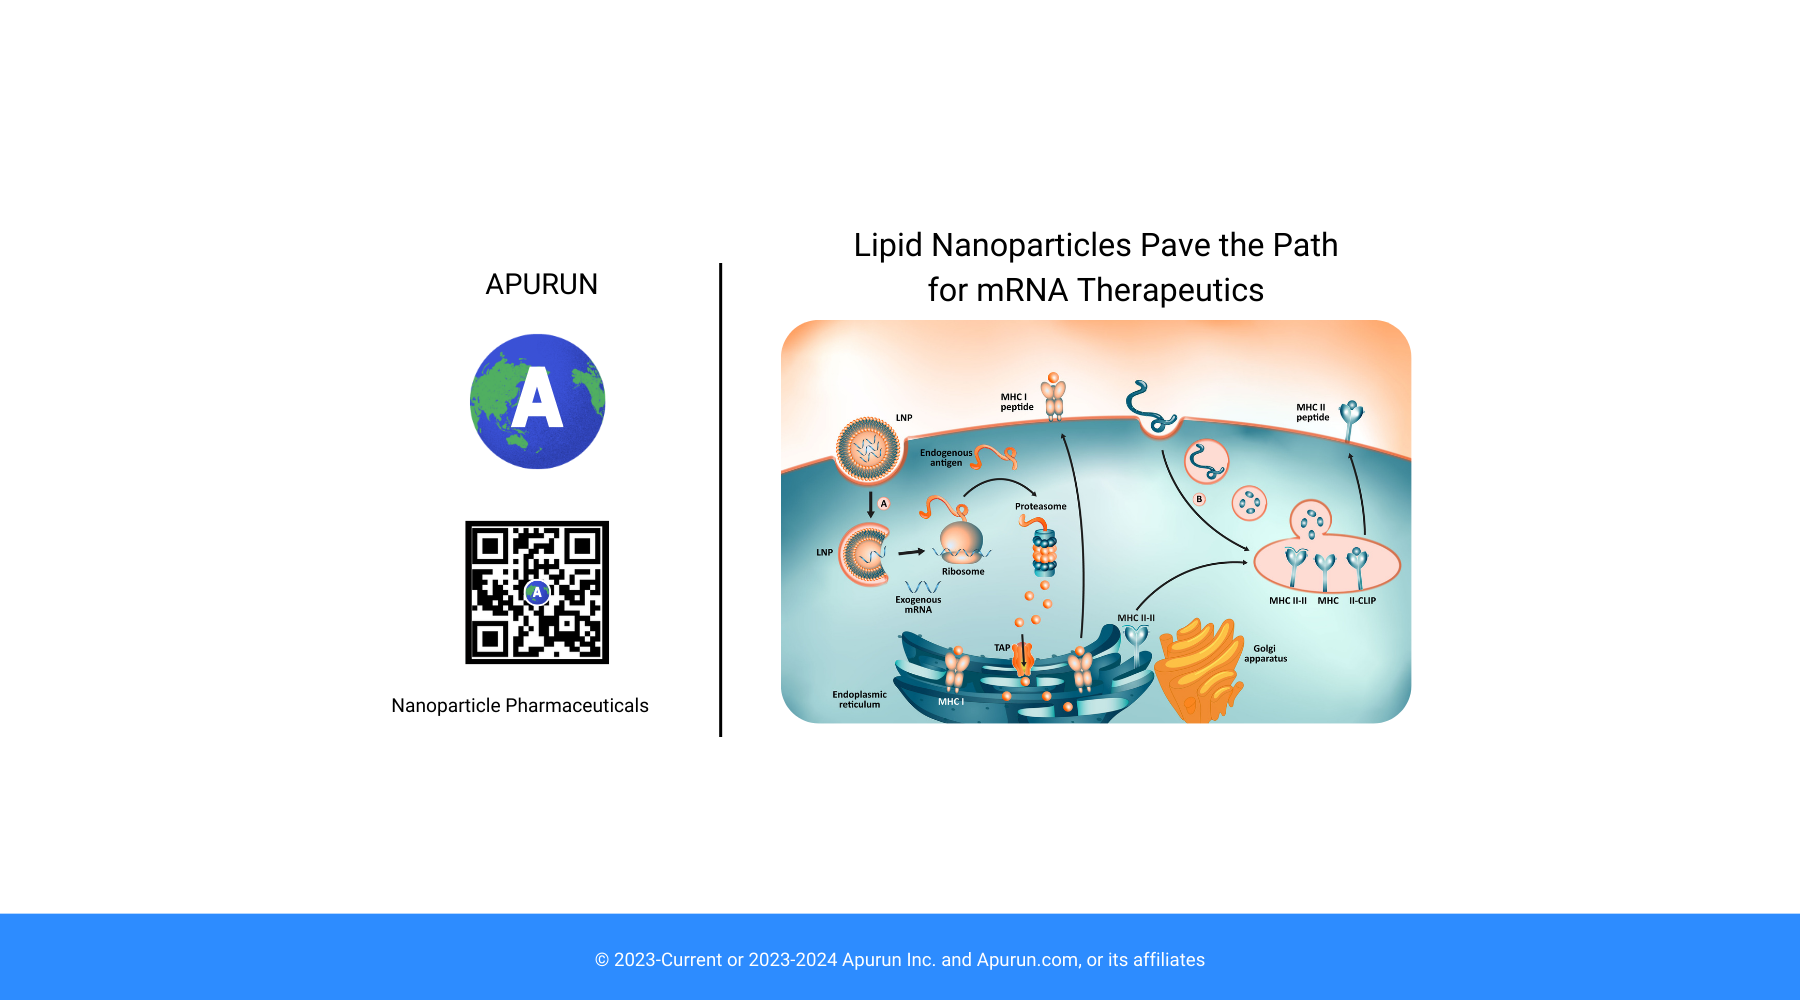 Lipid Nanoparticles Pave the Path for mRNA Therapeutics